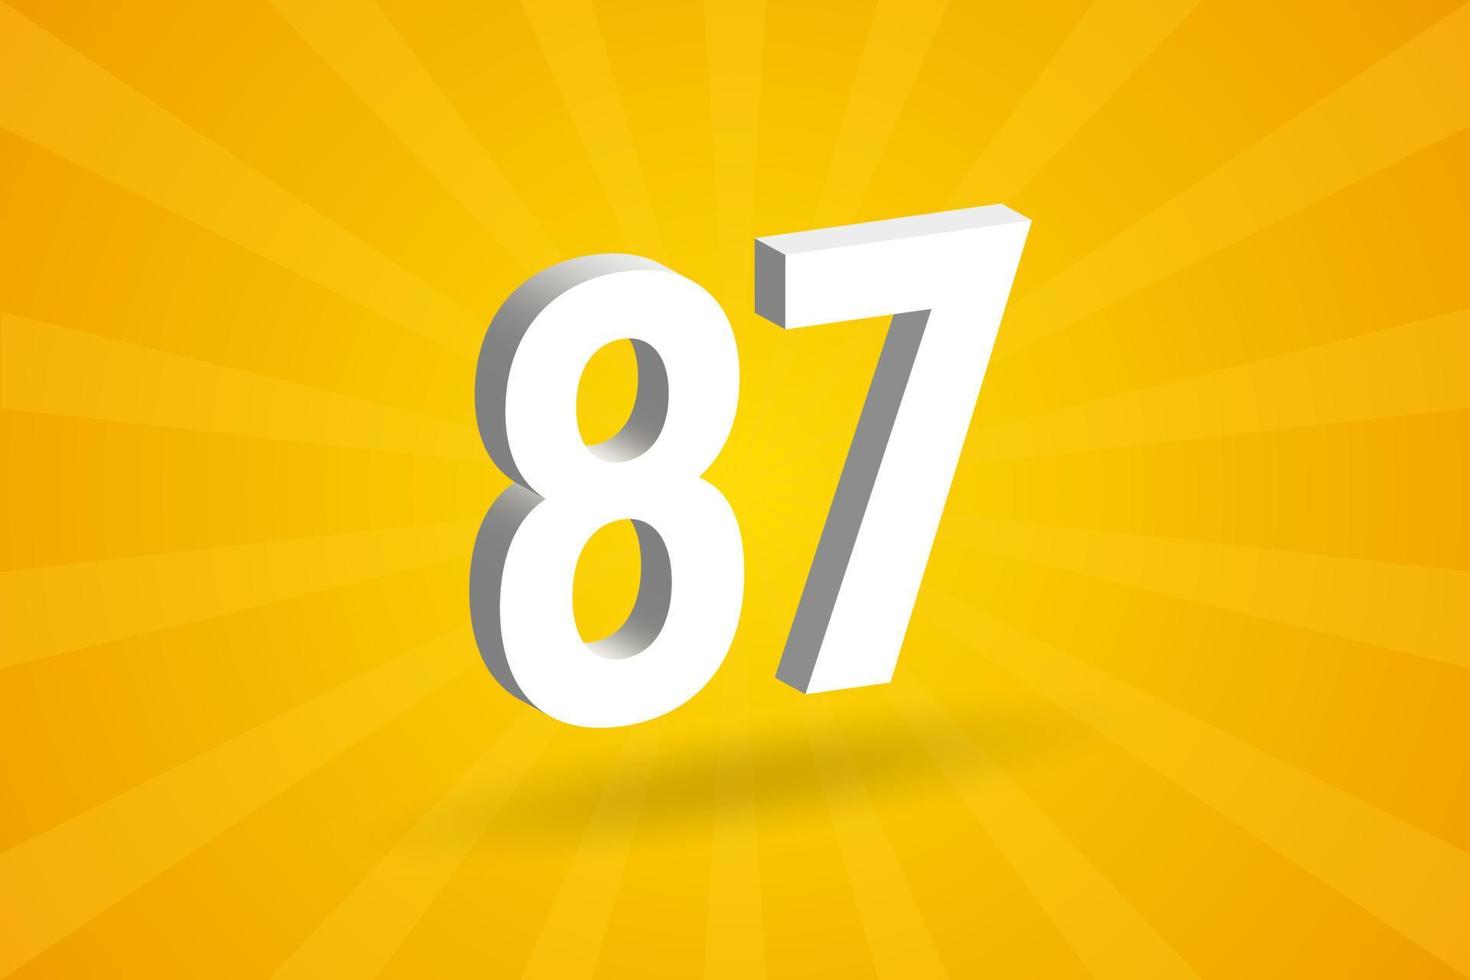 3d 87 siffra font alfabet. vit 3d siffra 87 med gul bakgrund vektor